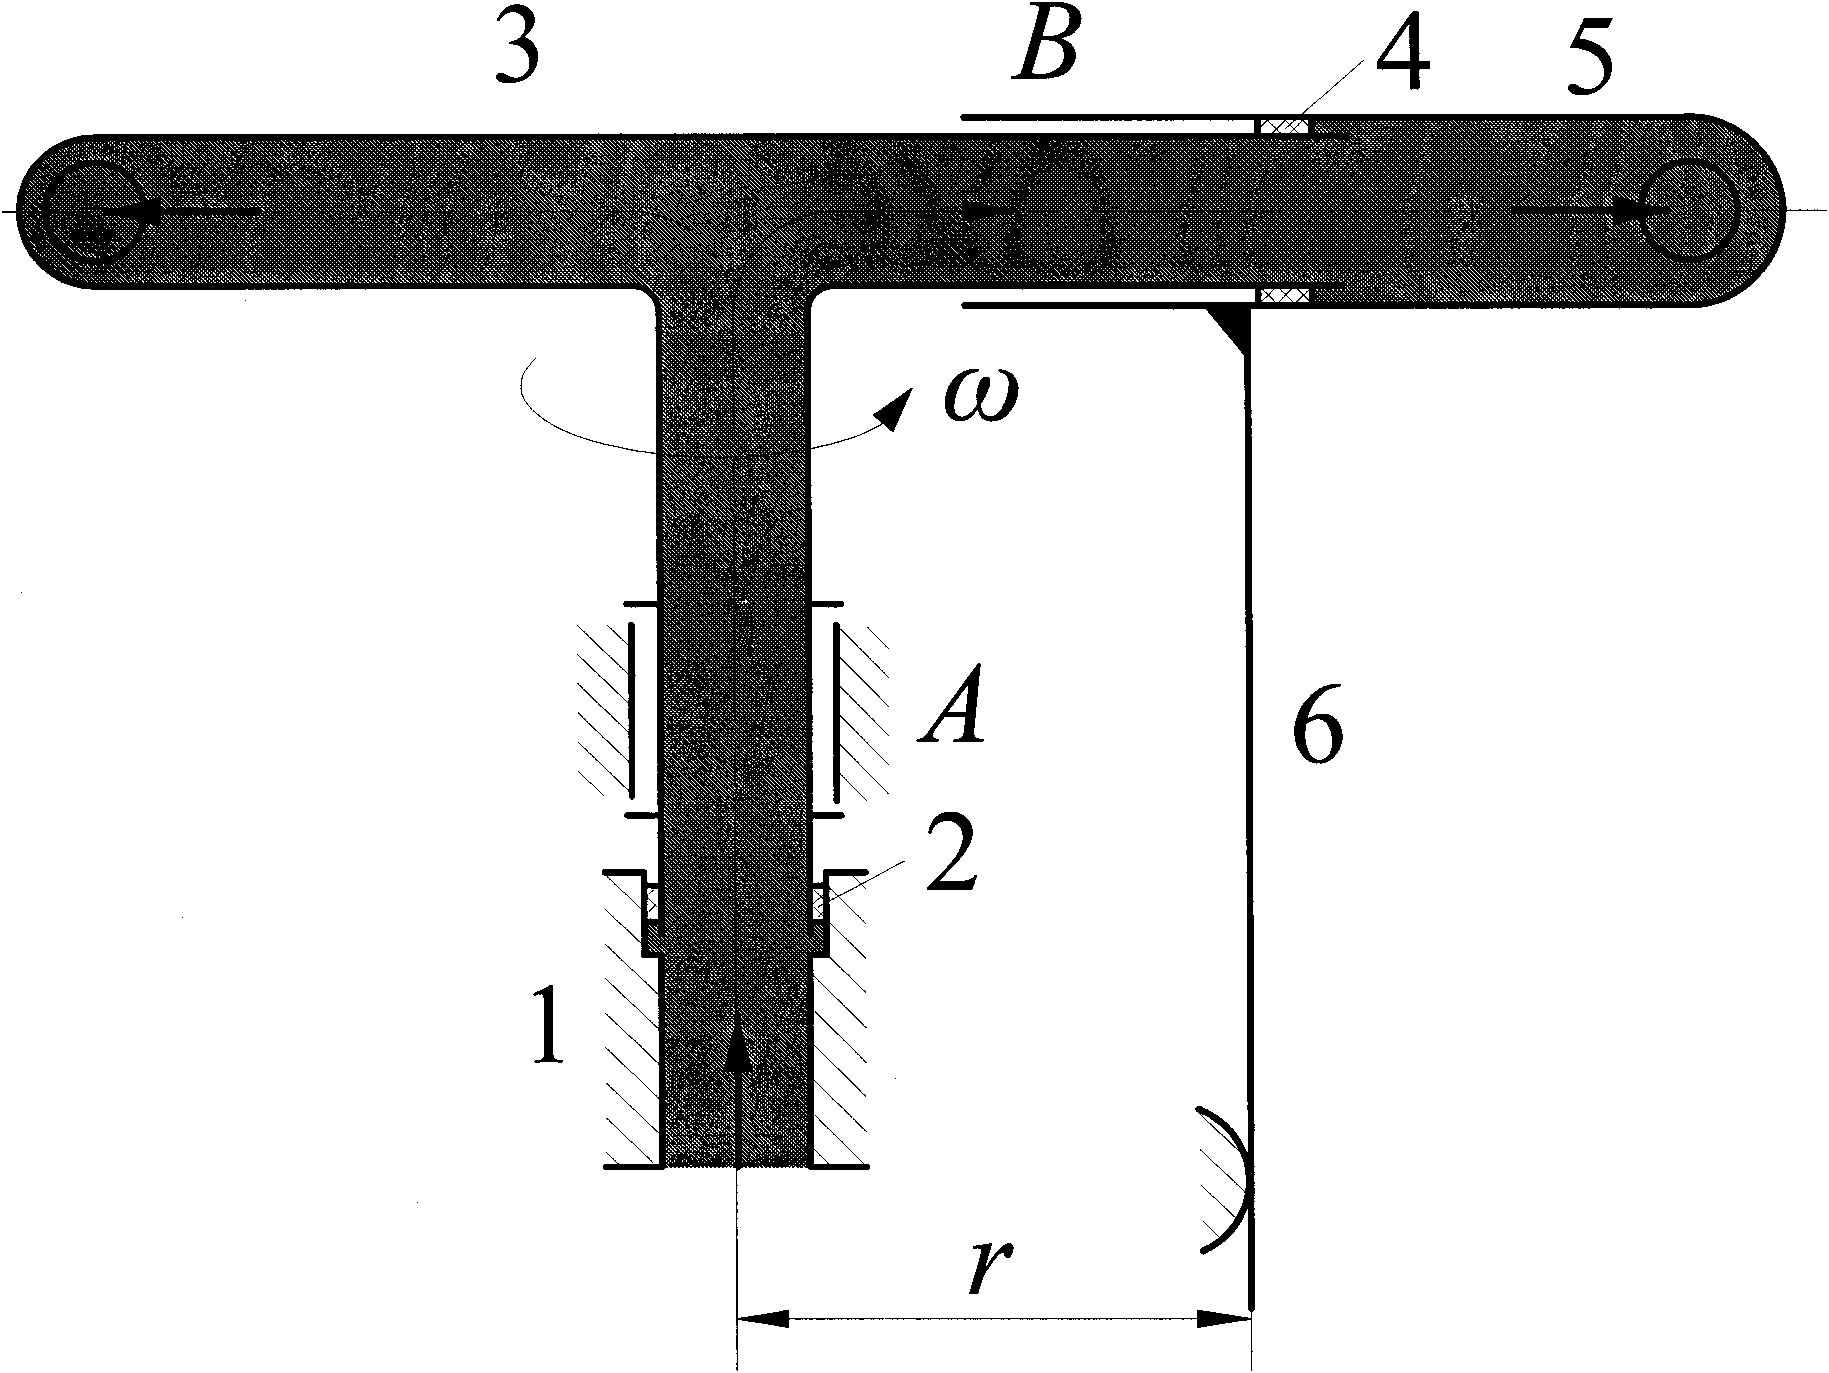 Rotary type-based fluid pattern spraying method